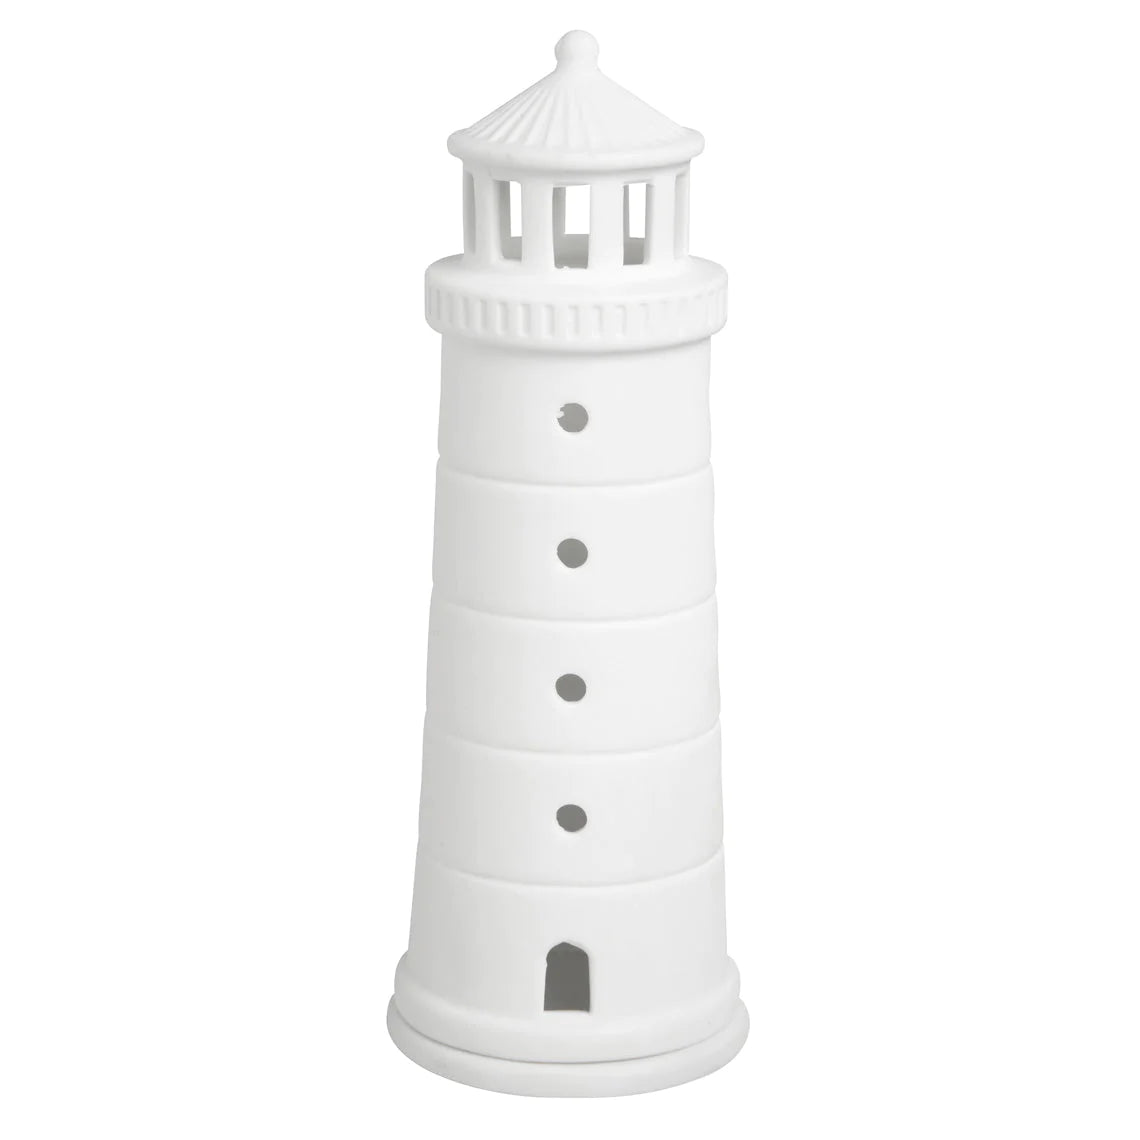 Beyond The Sea Lighthouse Tealight Holder - Large - 15.7"